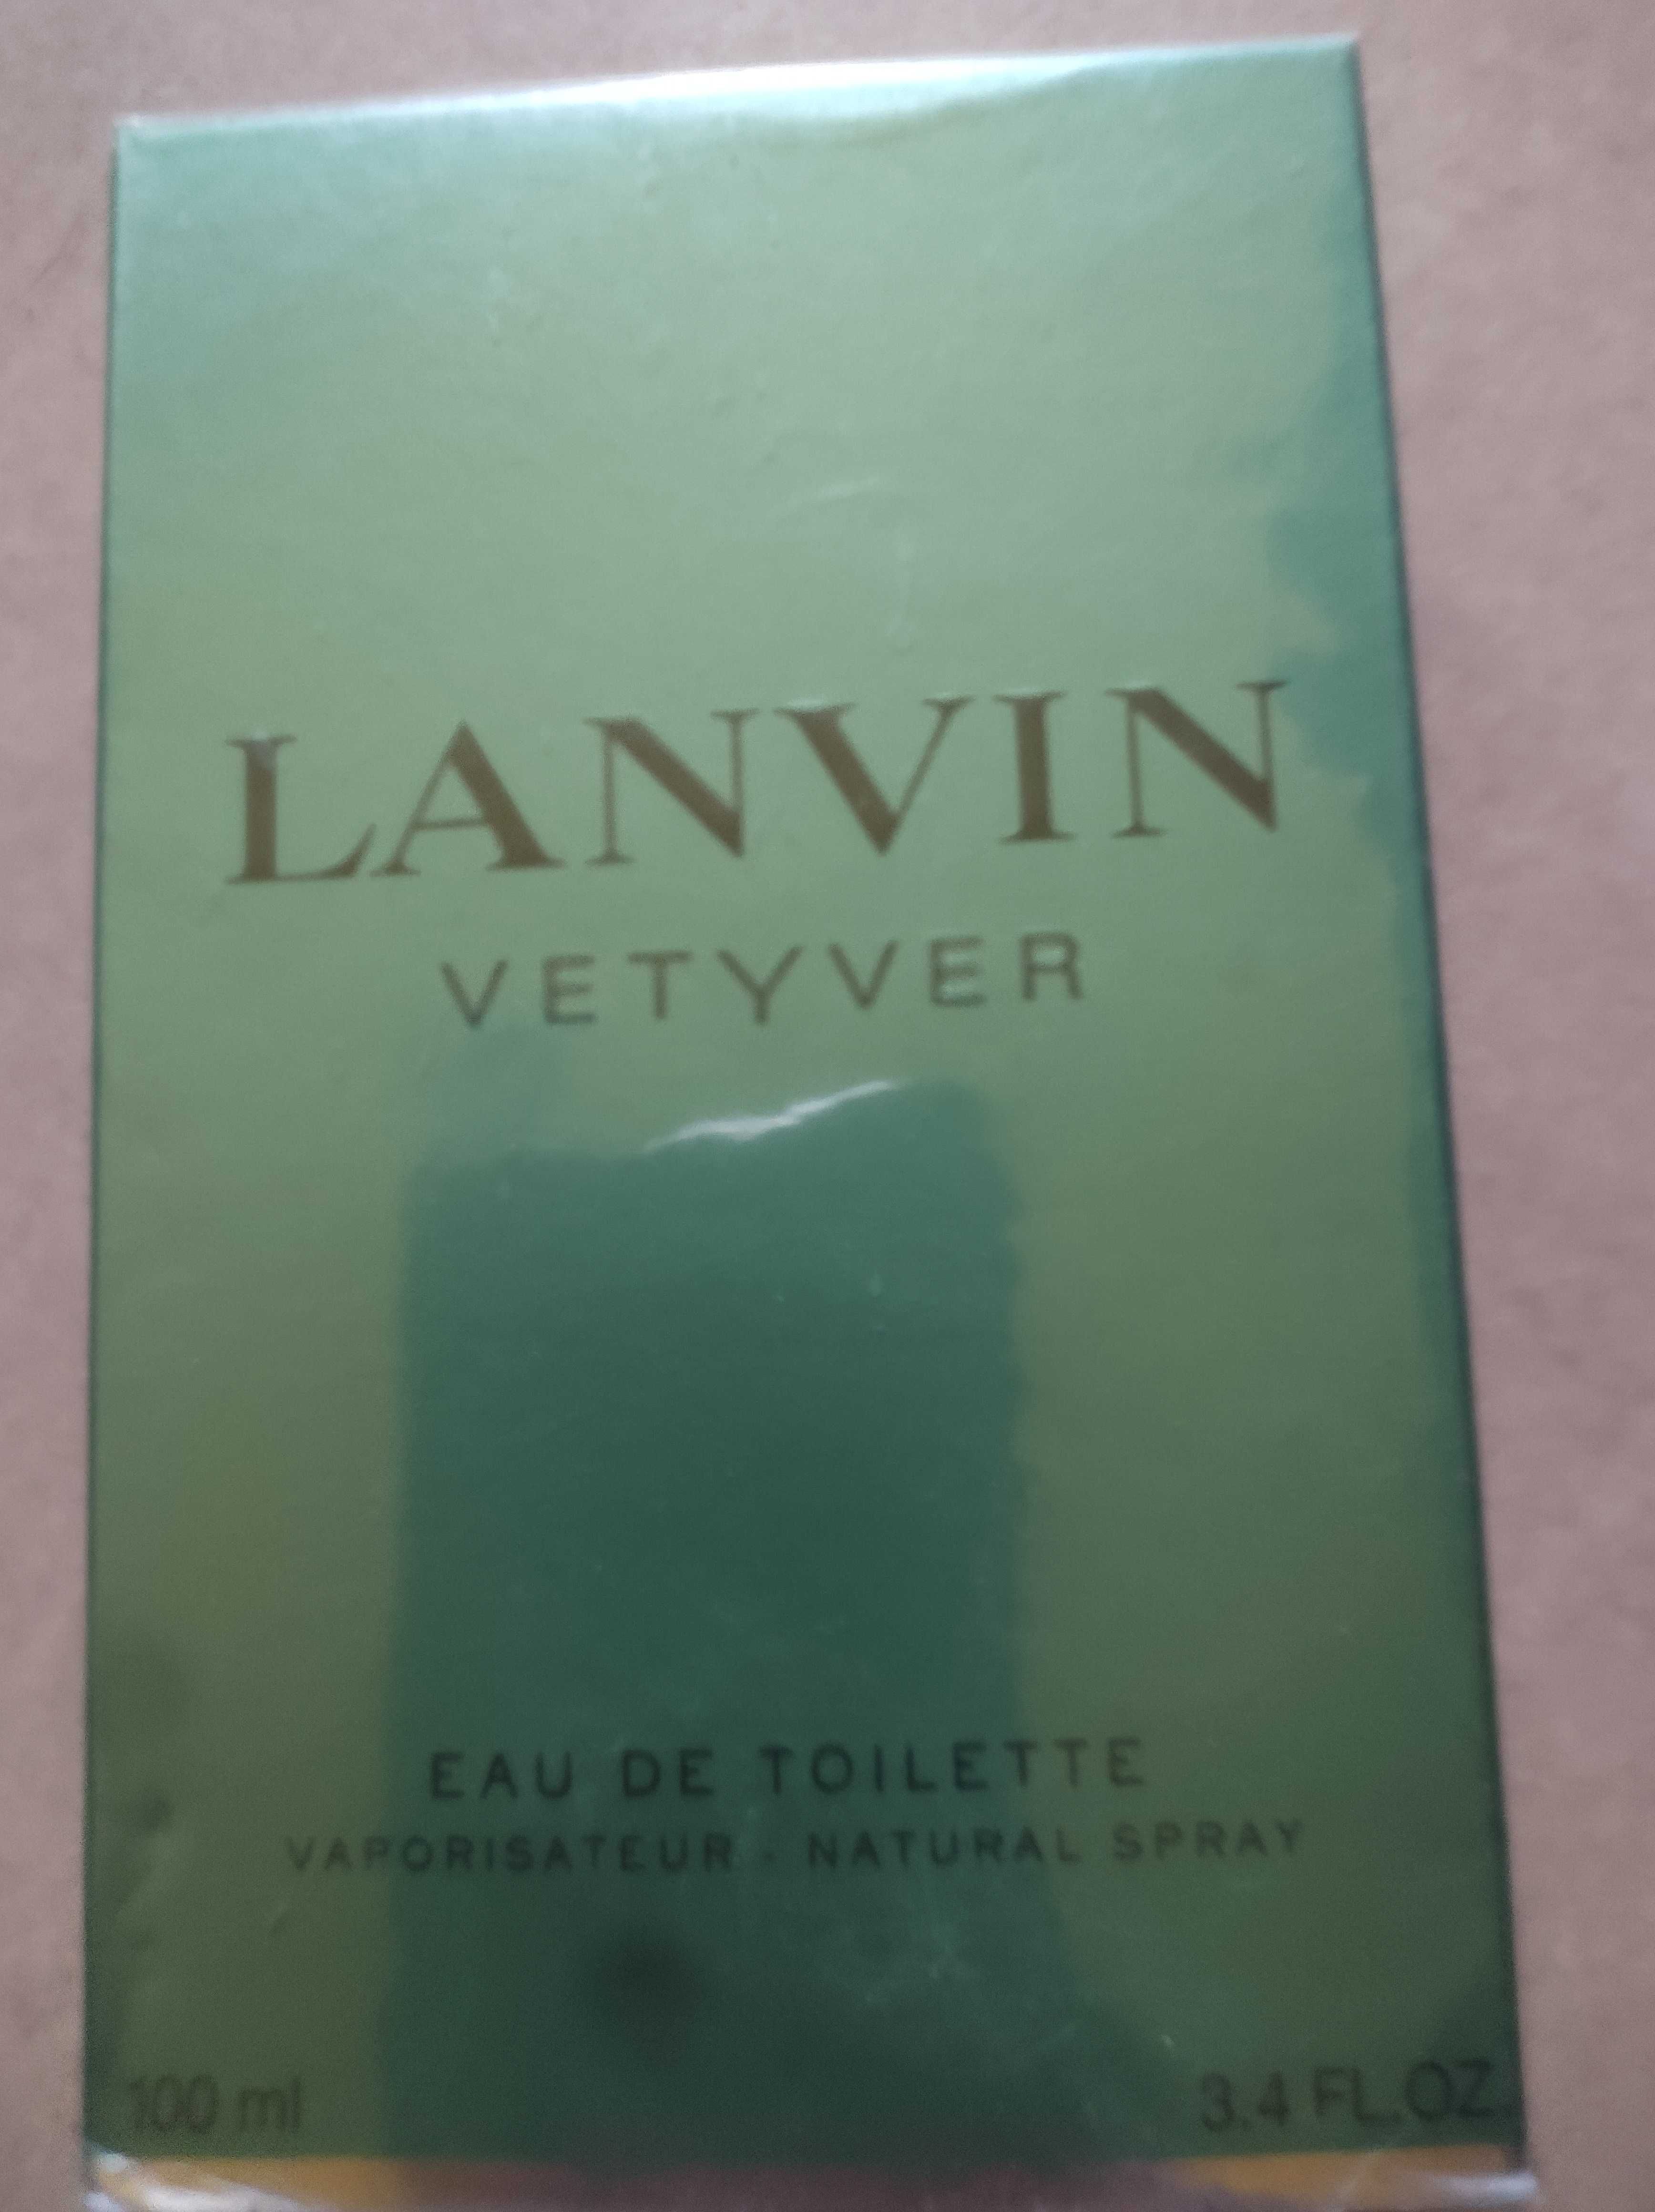 Lanvin Vetyver eau de toilette 100 ml